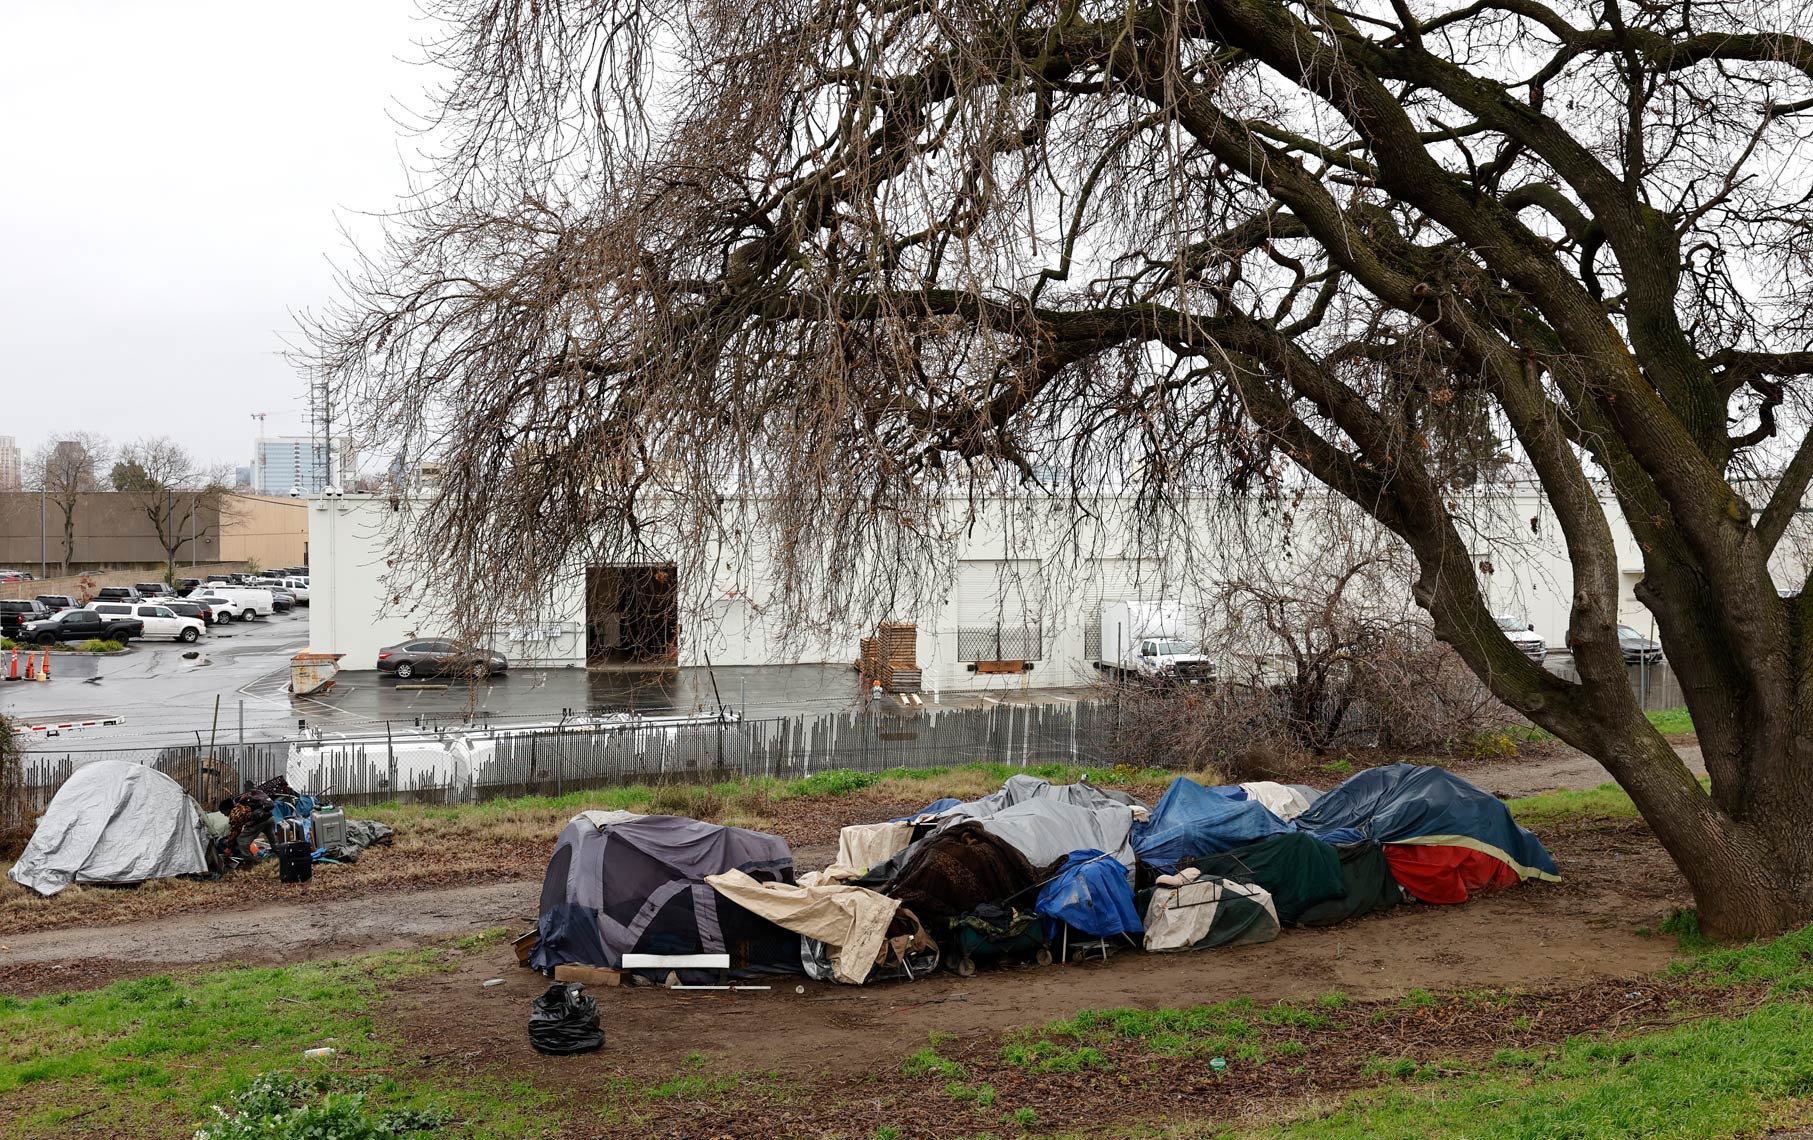 Homeless Encampment Under a Tree